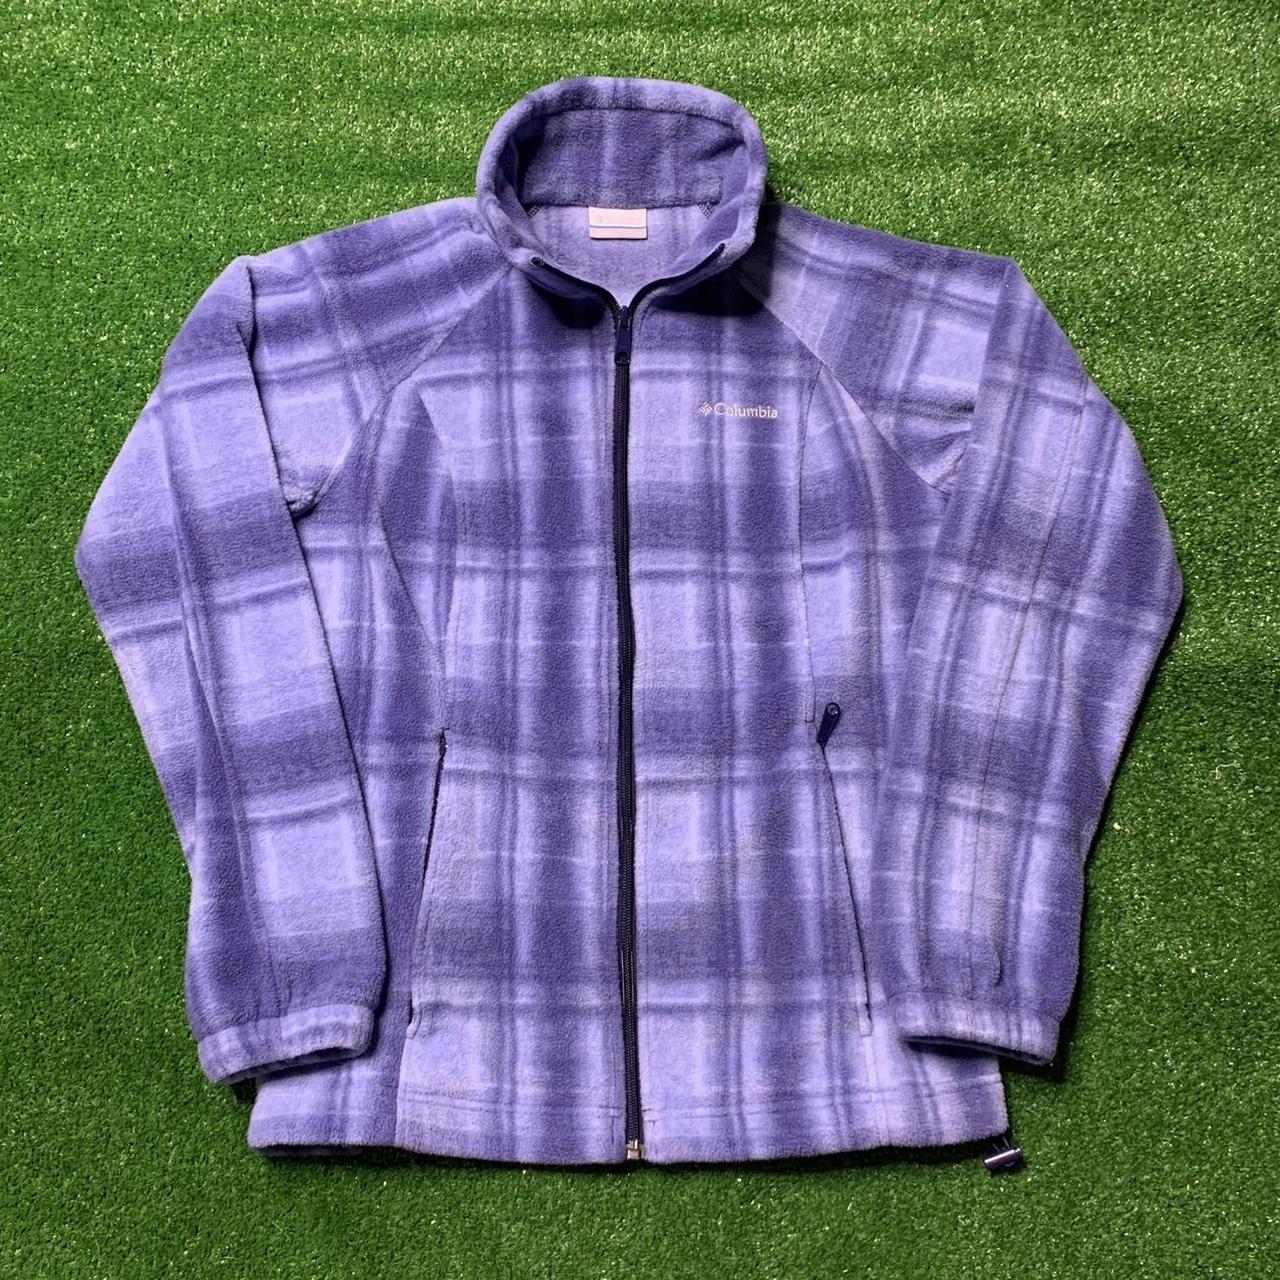 Product Image 1 - Blue Plaid Columbia Fleece Jacket